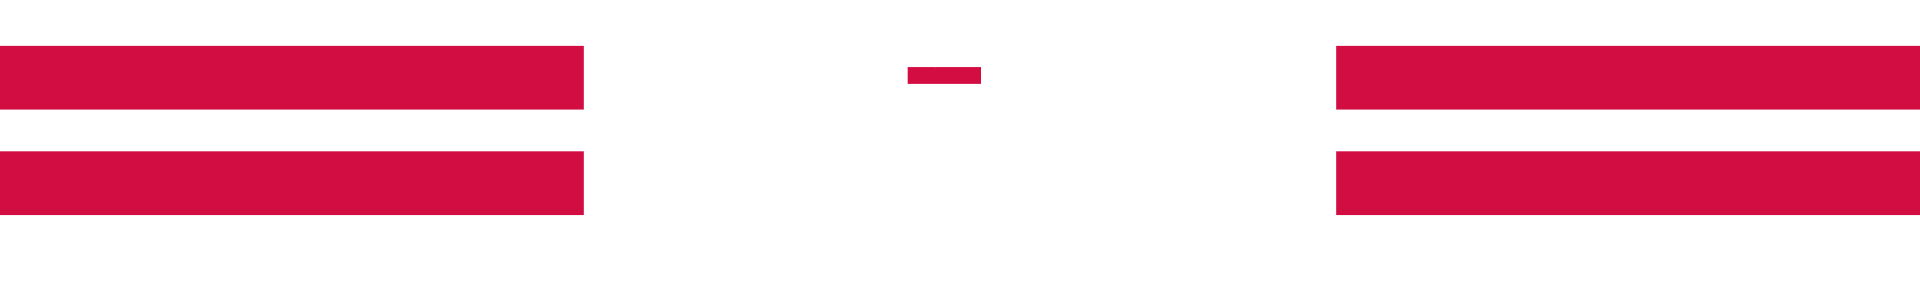 Stockage et Logistique Page Icon